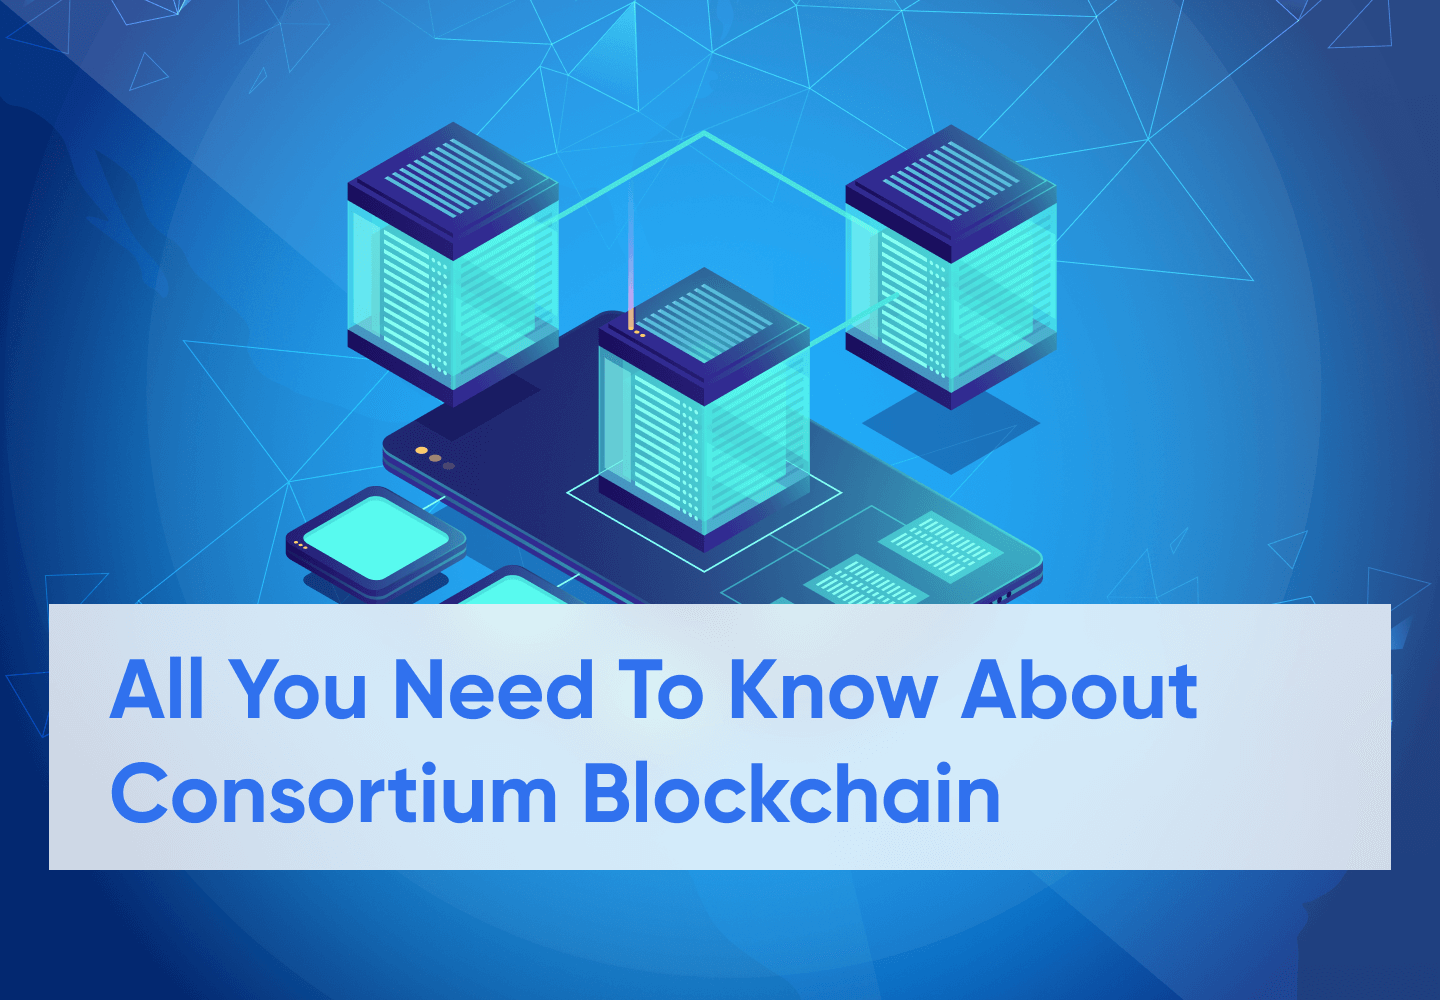 What Is A Consortium Blockchain?